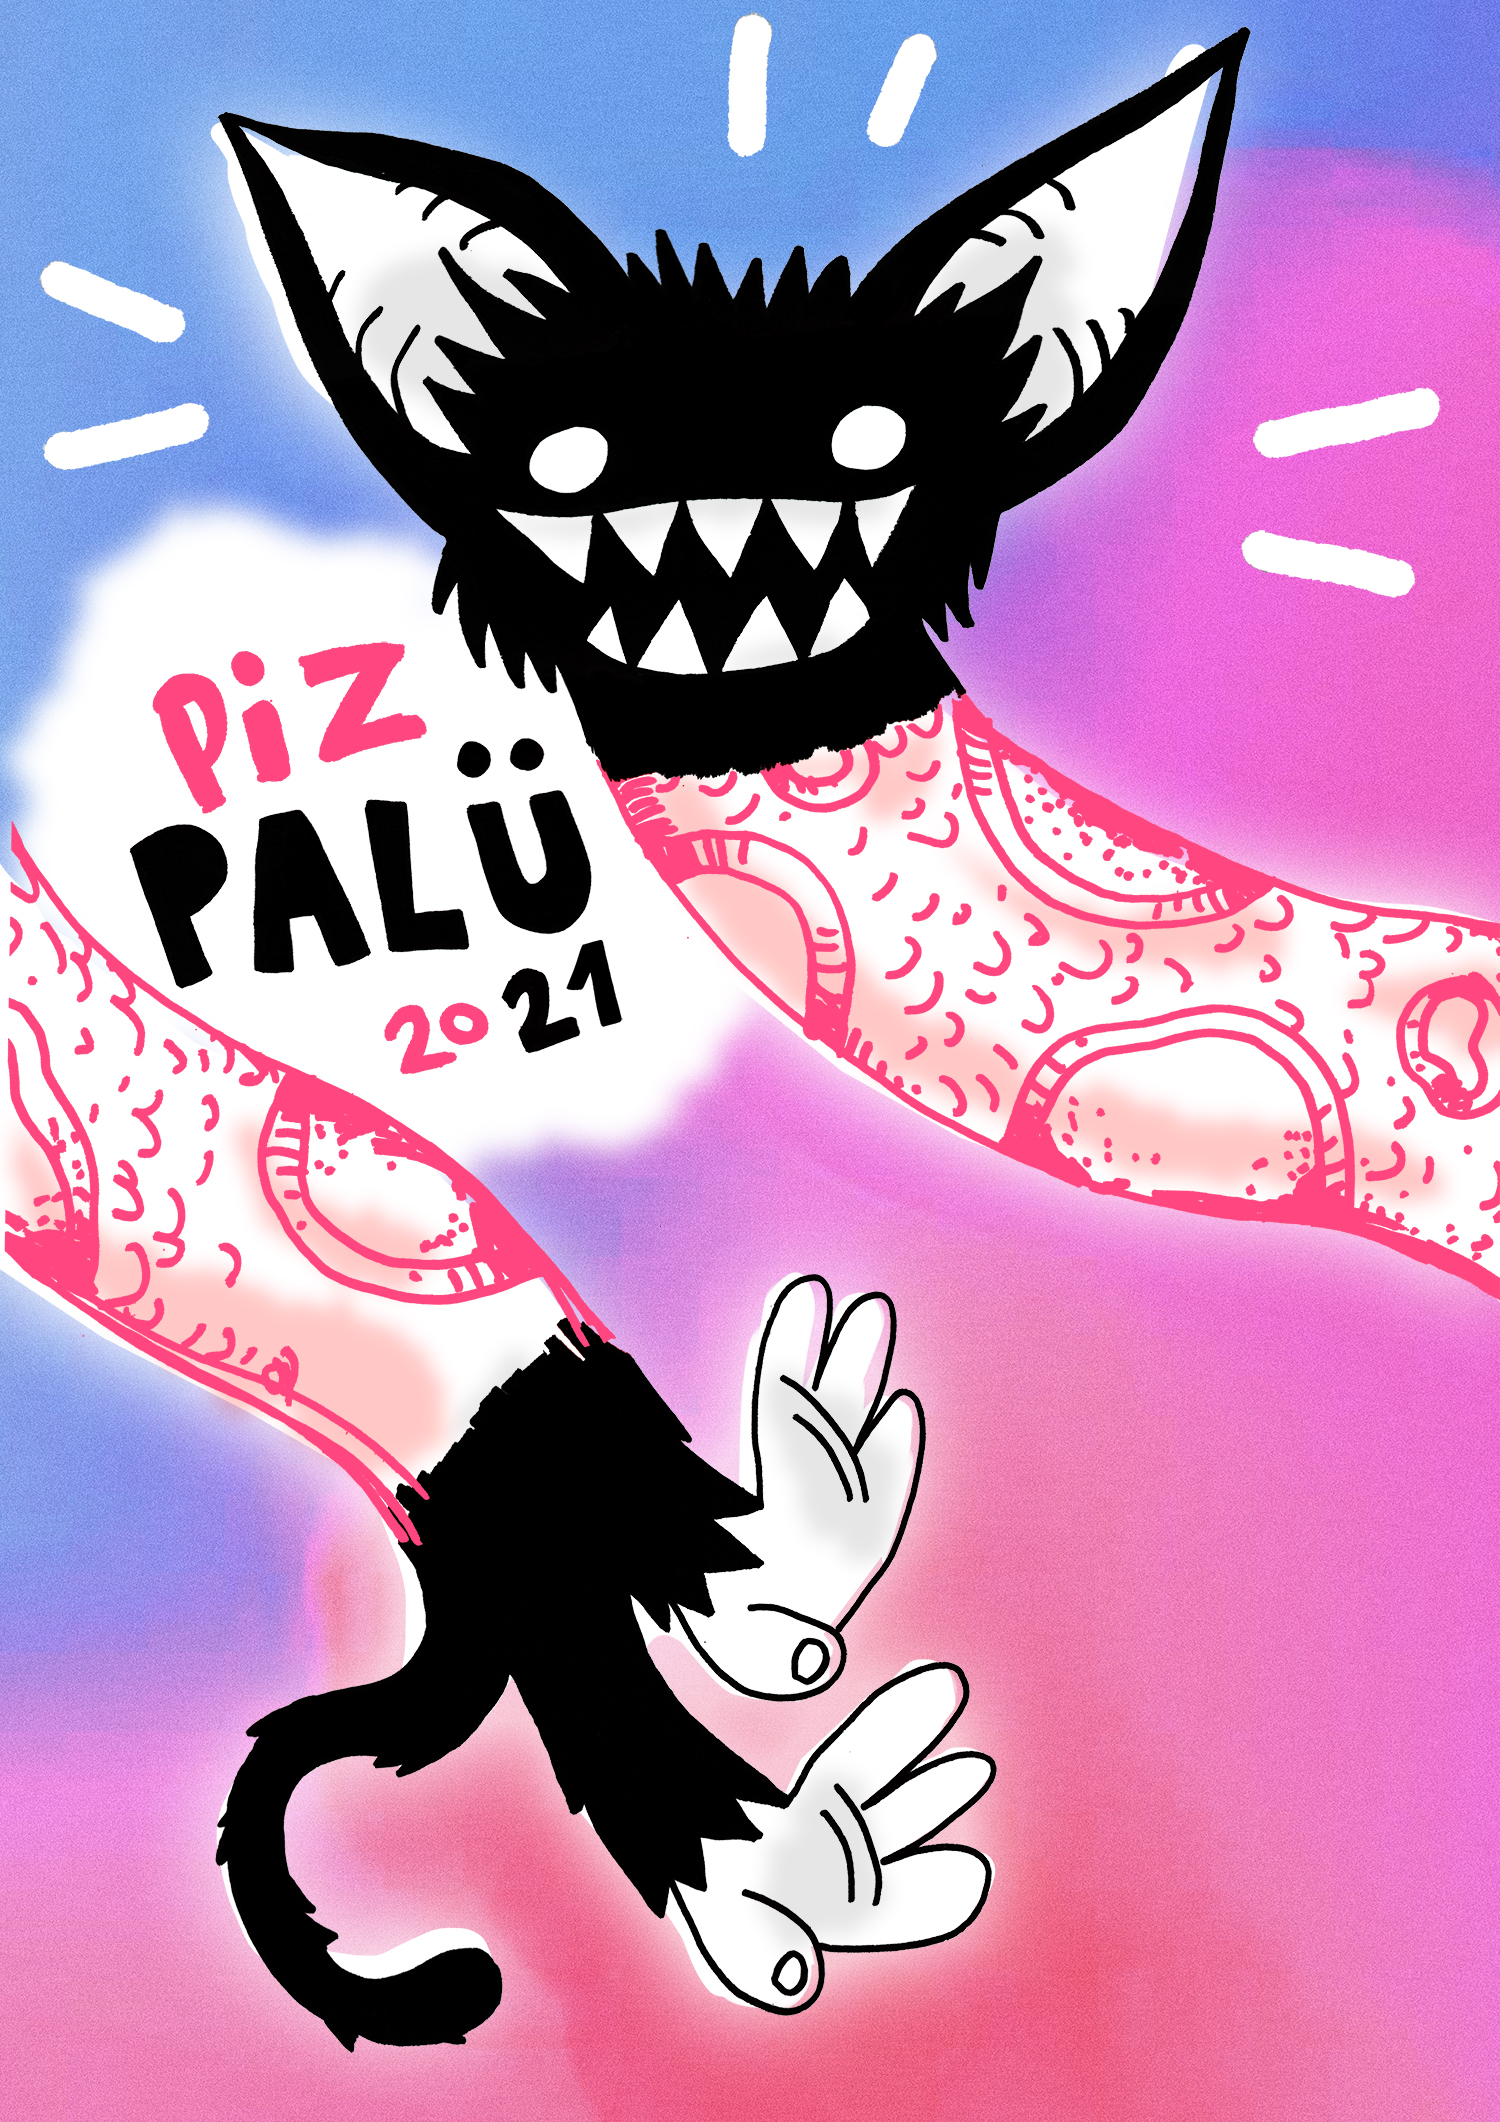 Piz Palu Festival © Panpancucul et Leolitch